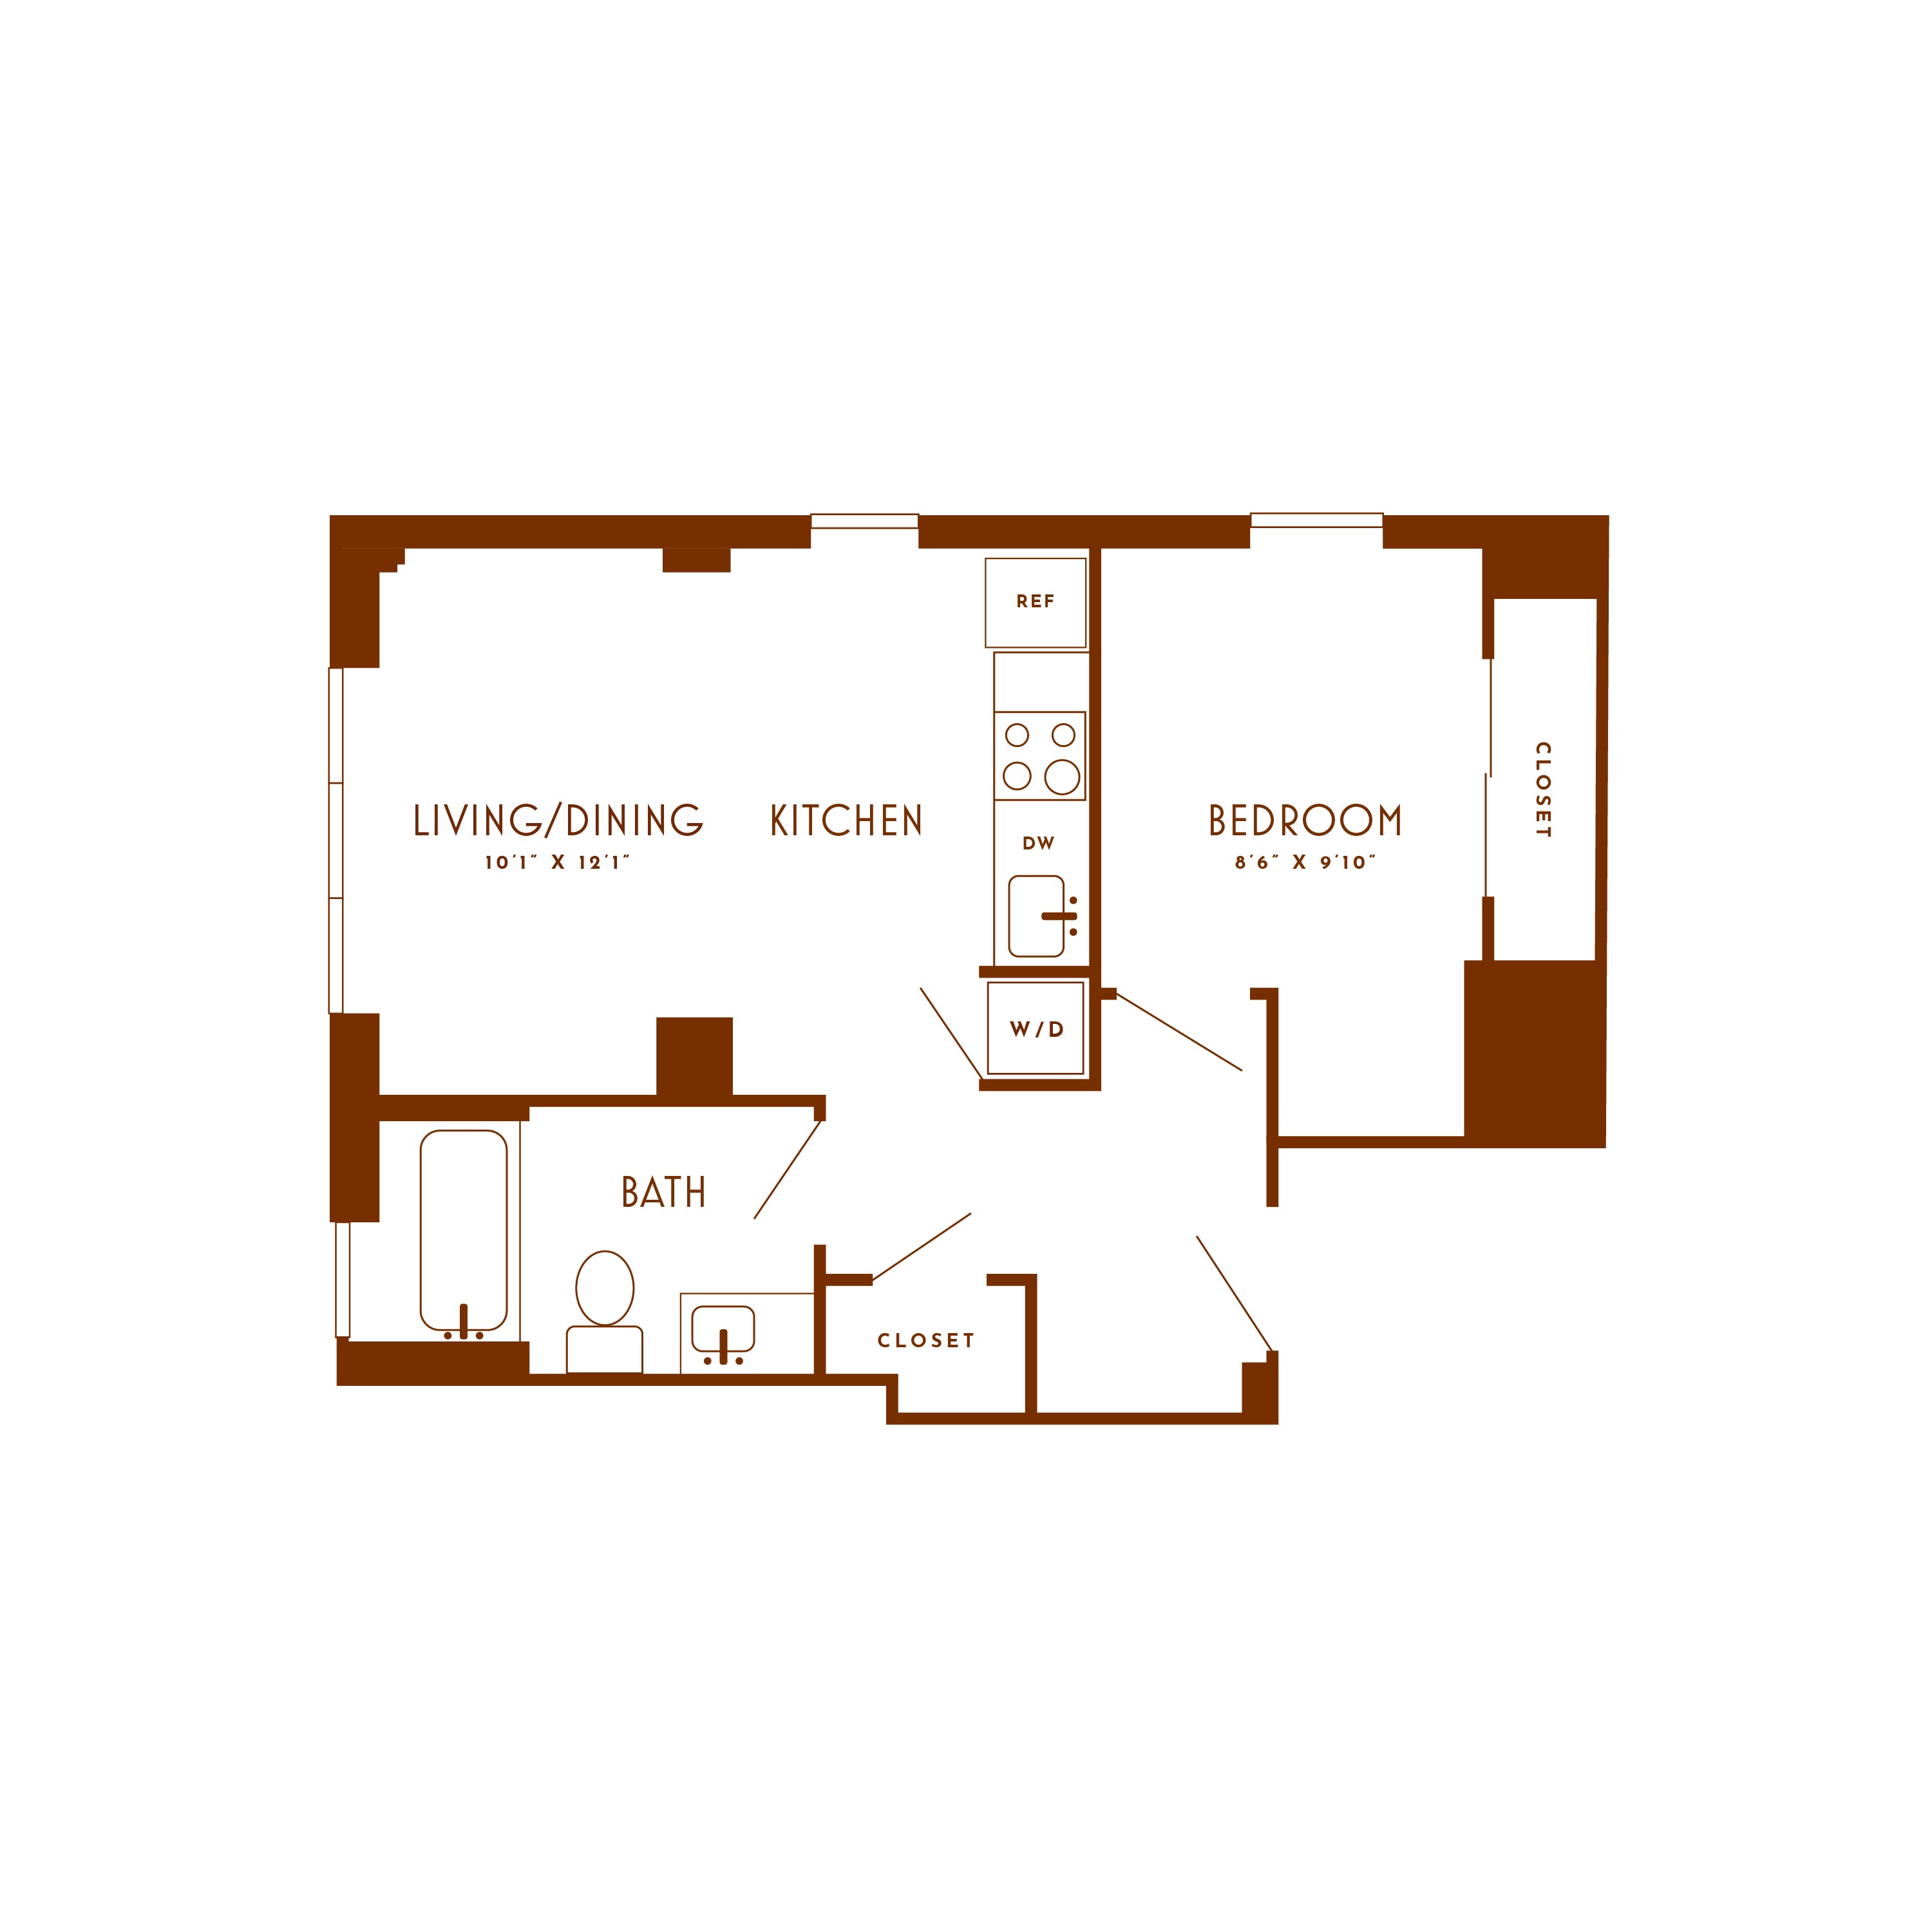 Floor plan image of unit 806